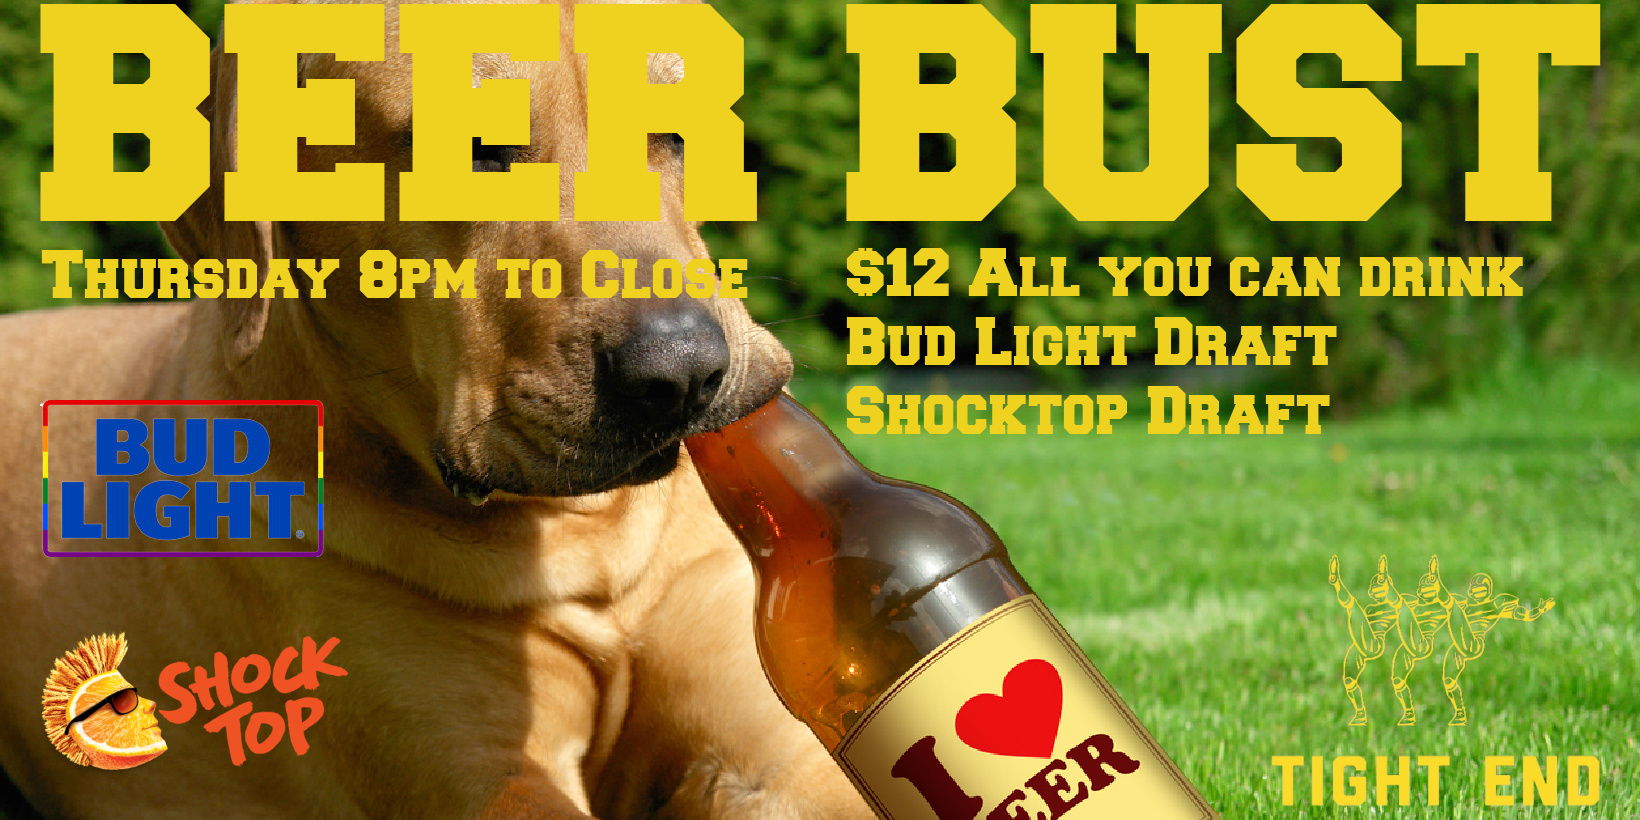 Beer Bust  promotional image